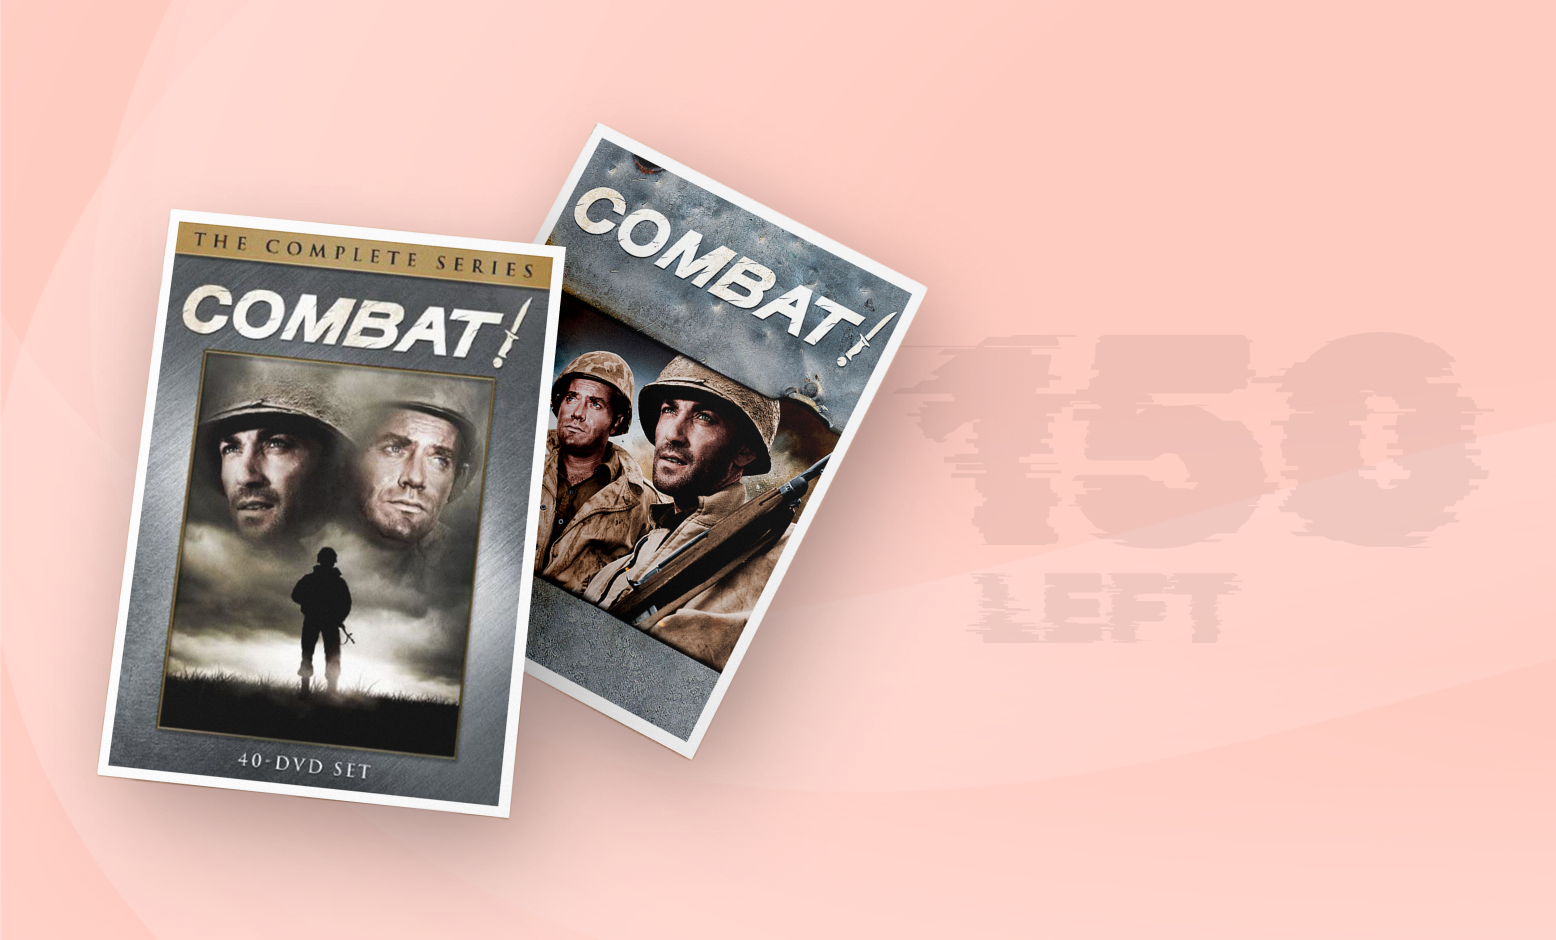 The Complete Series - Combat